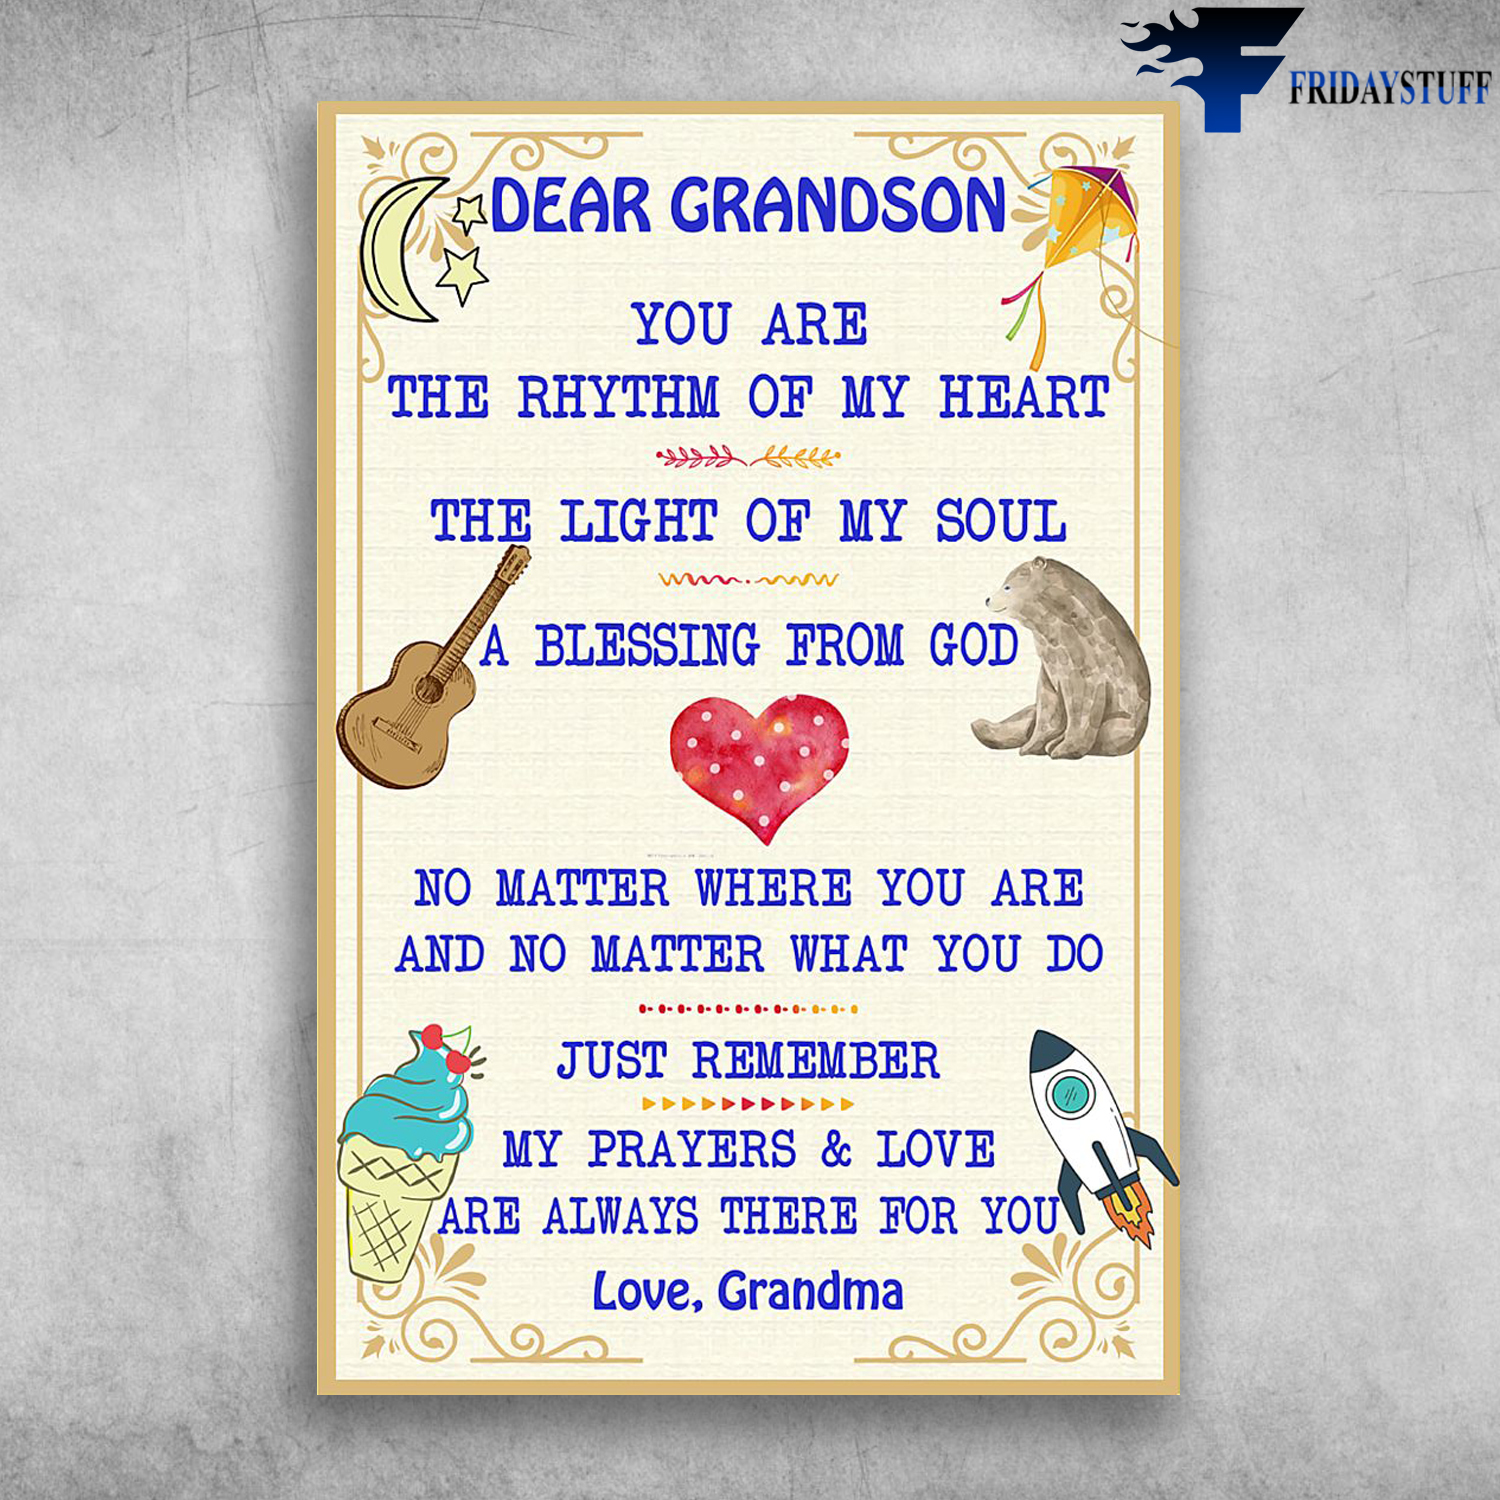 Dear Grandson You Are The Rhythm Of My Heart The Light Of My Soul Love Grandma